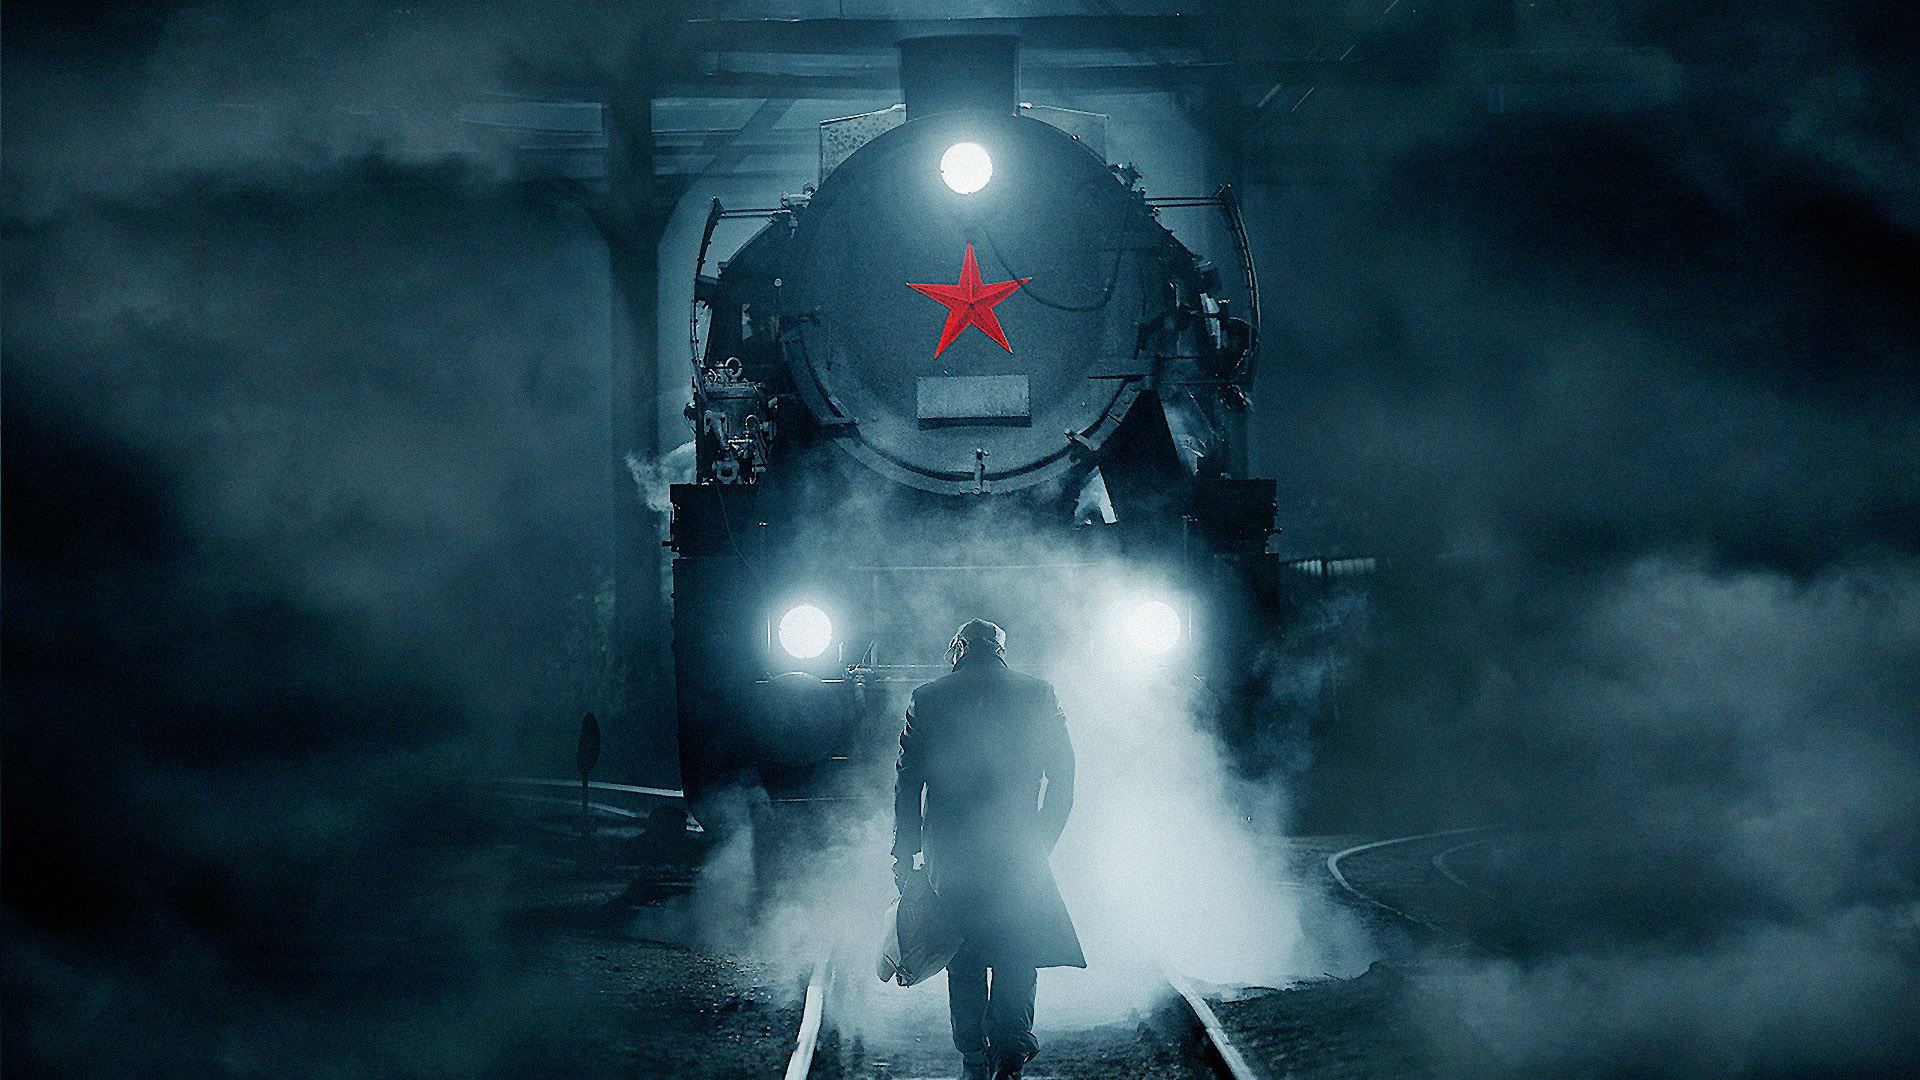 movie, child 44, fog, train